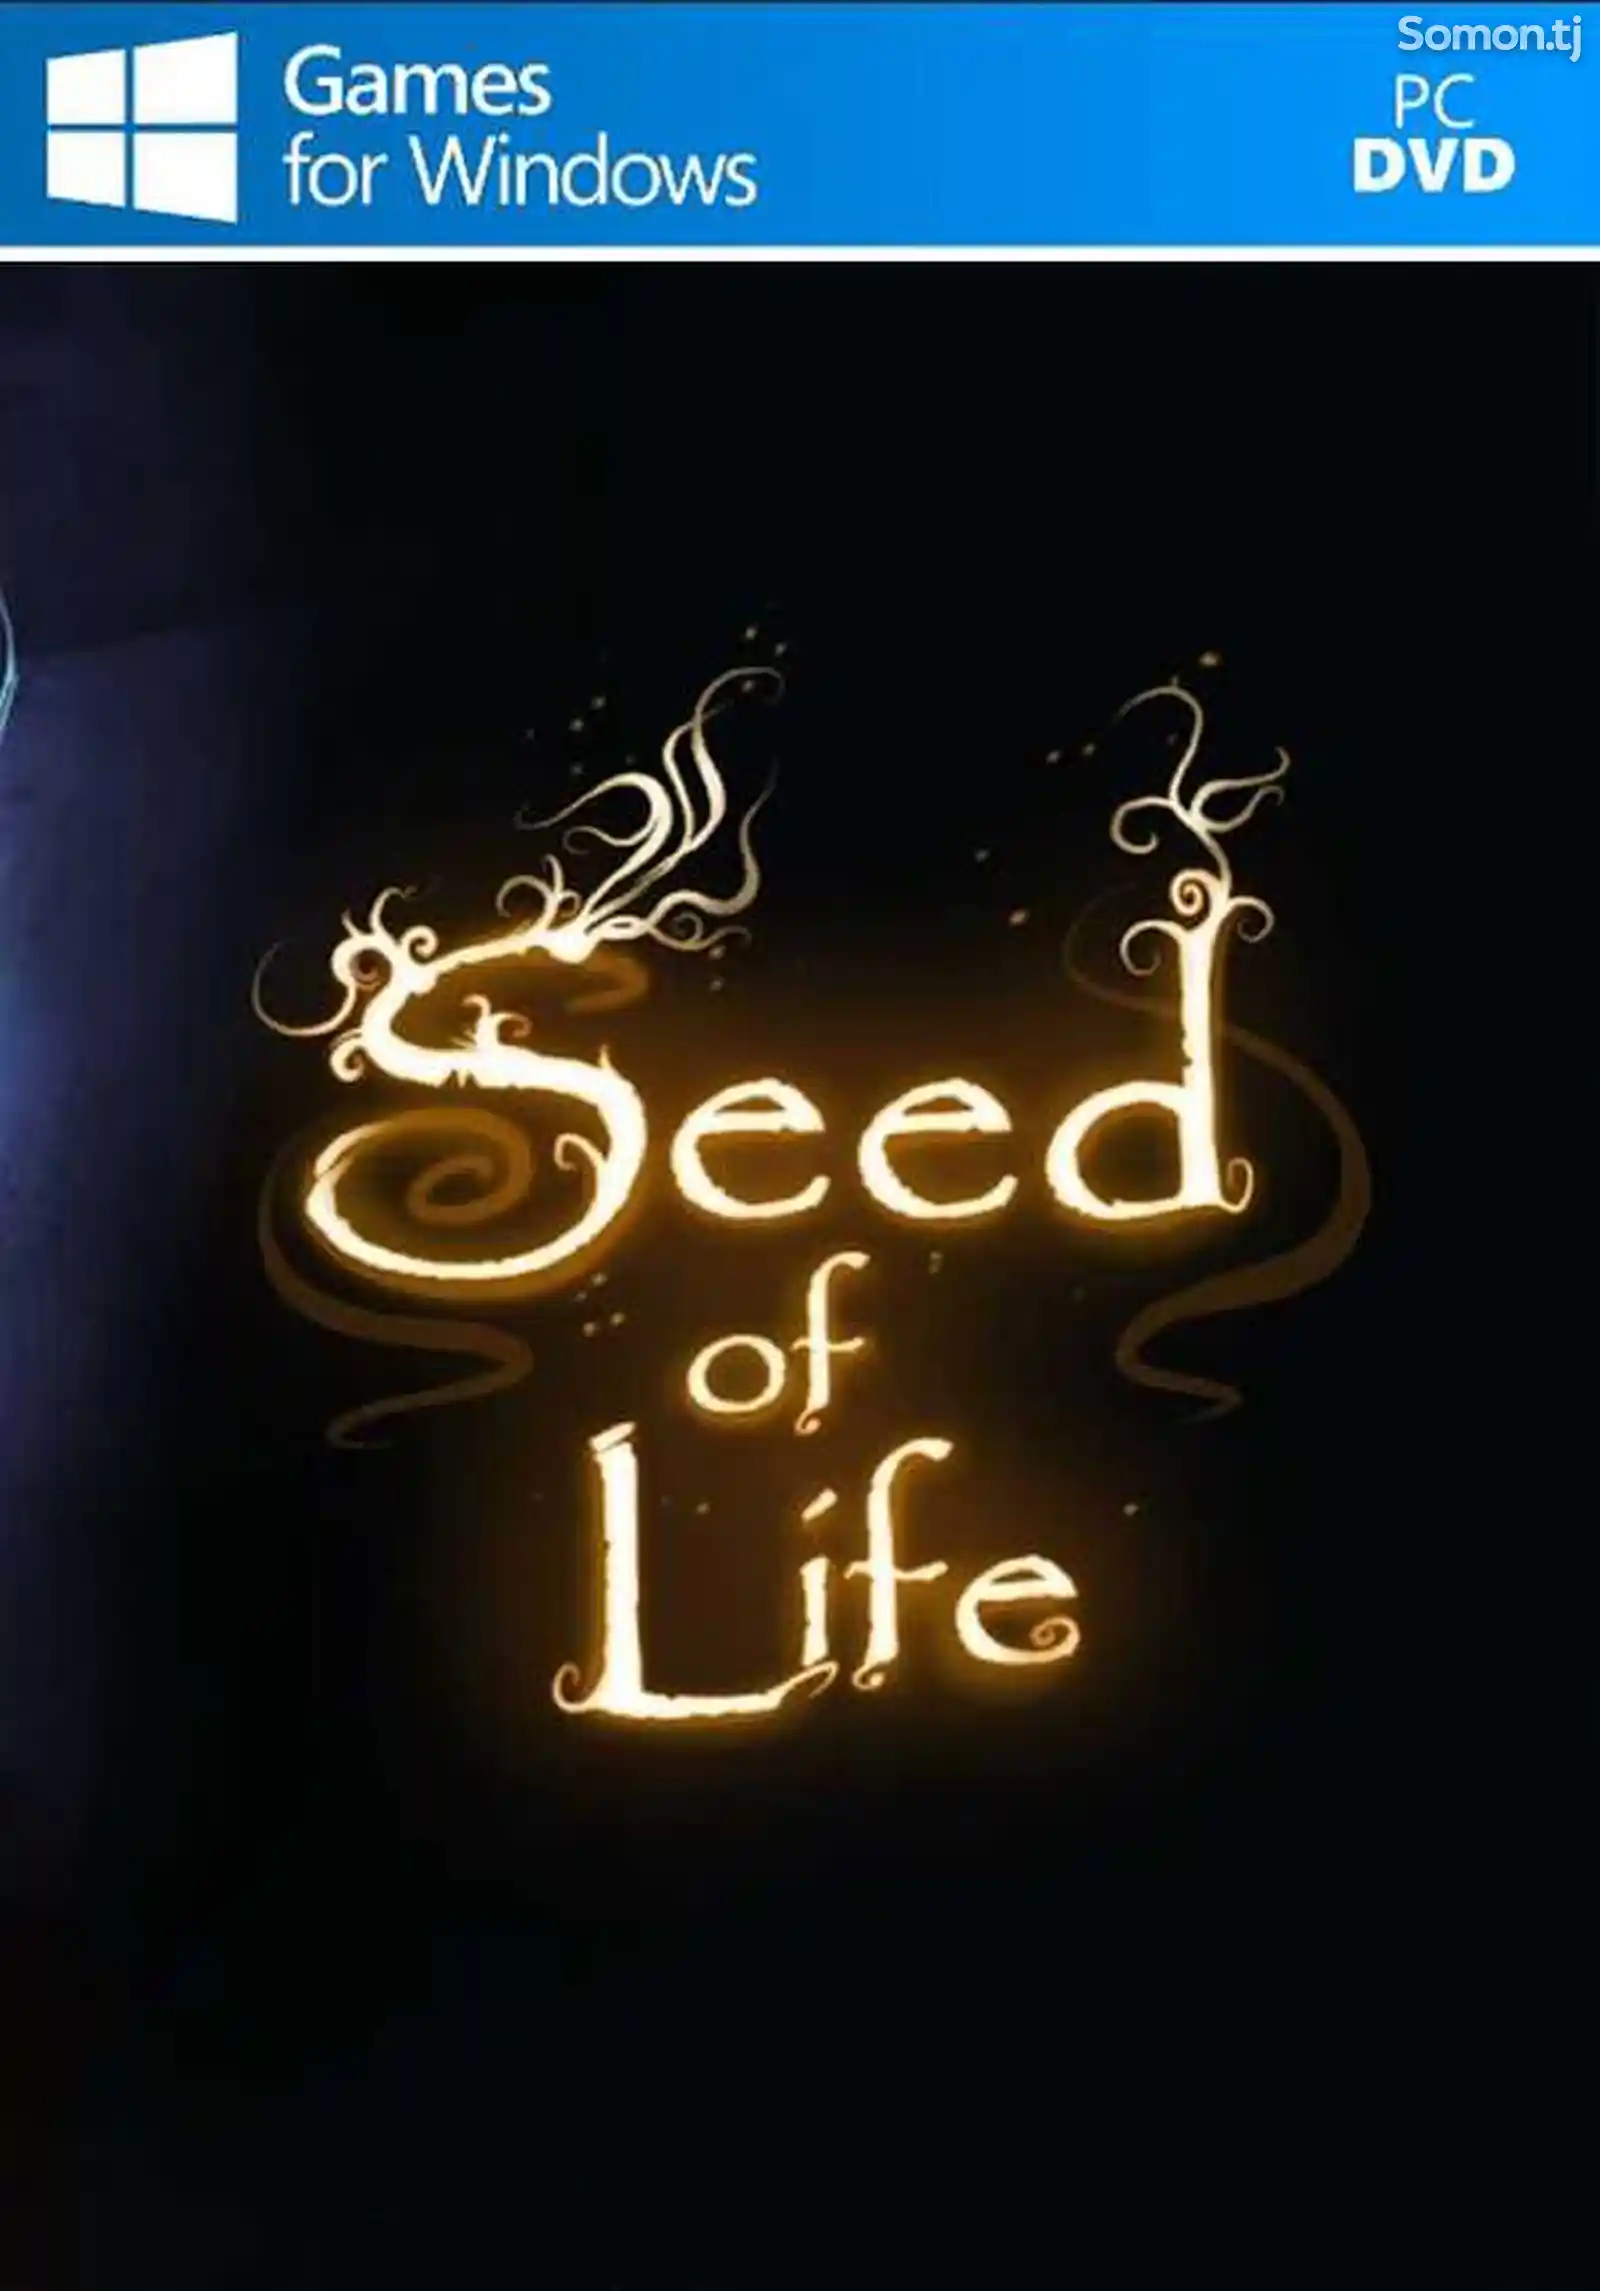 Игра Seed of life для компьютера-пк-pc-1